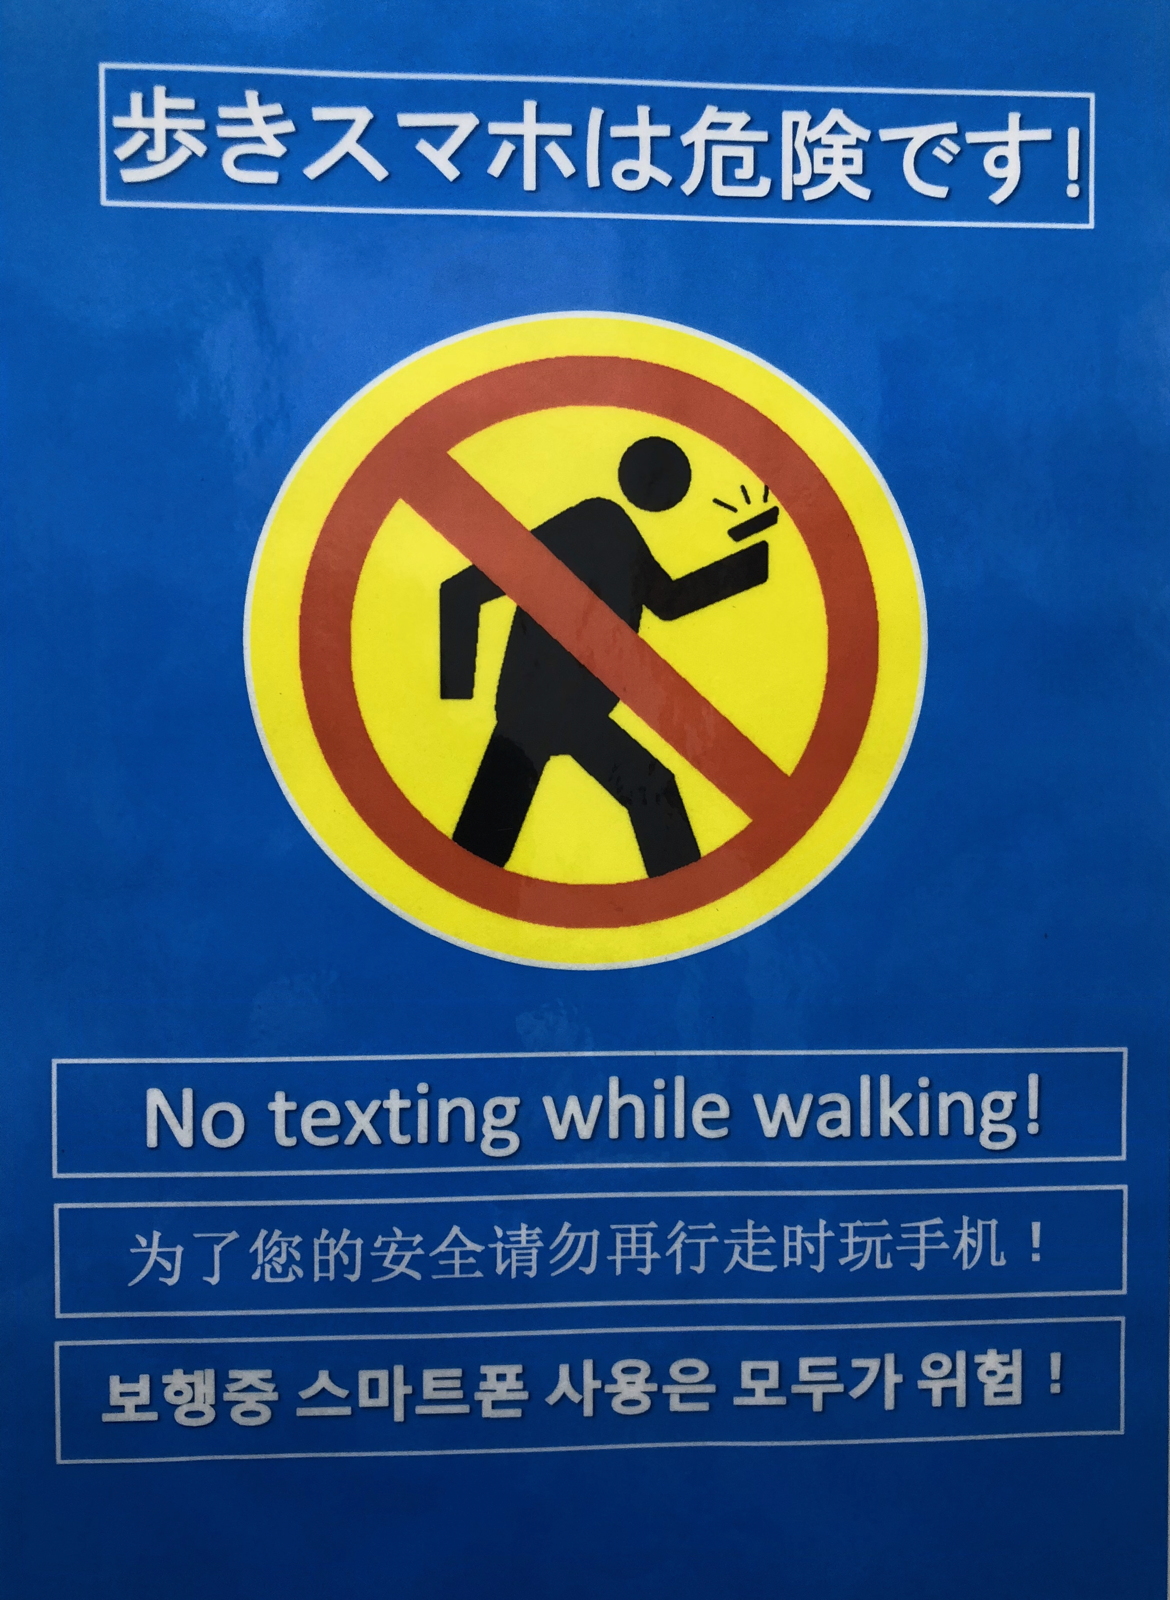 Okayama – Walking while using a smartphone is dangerous.